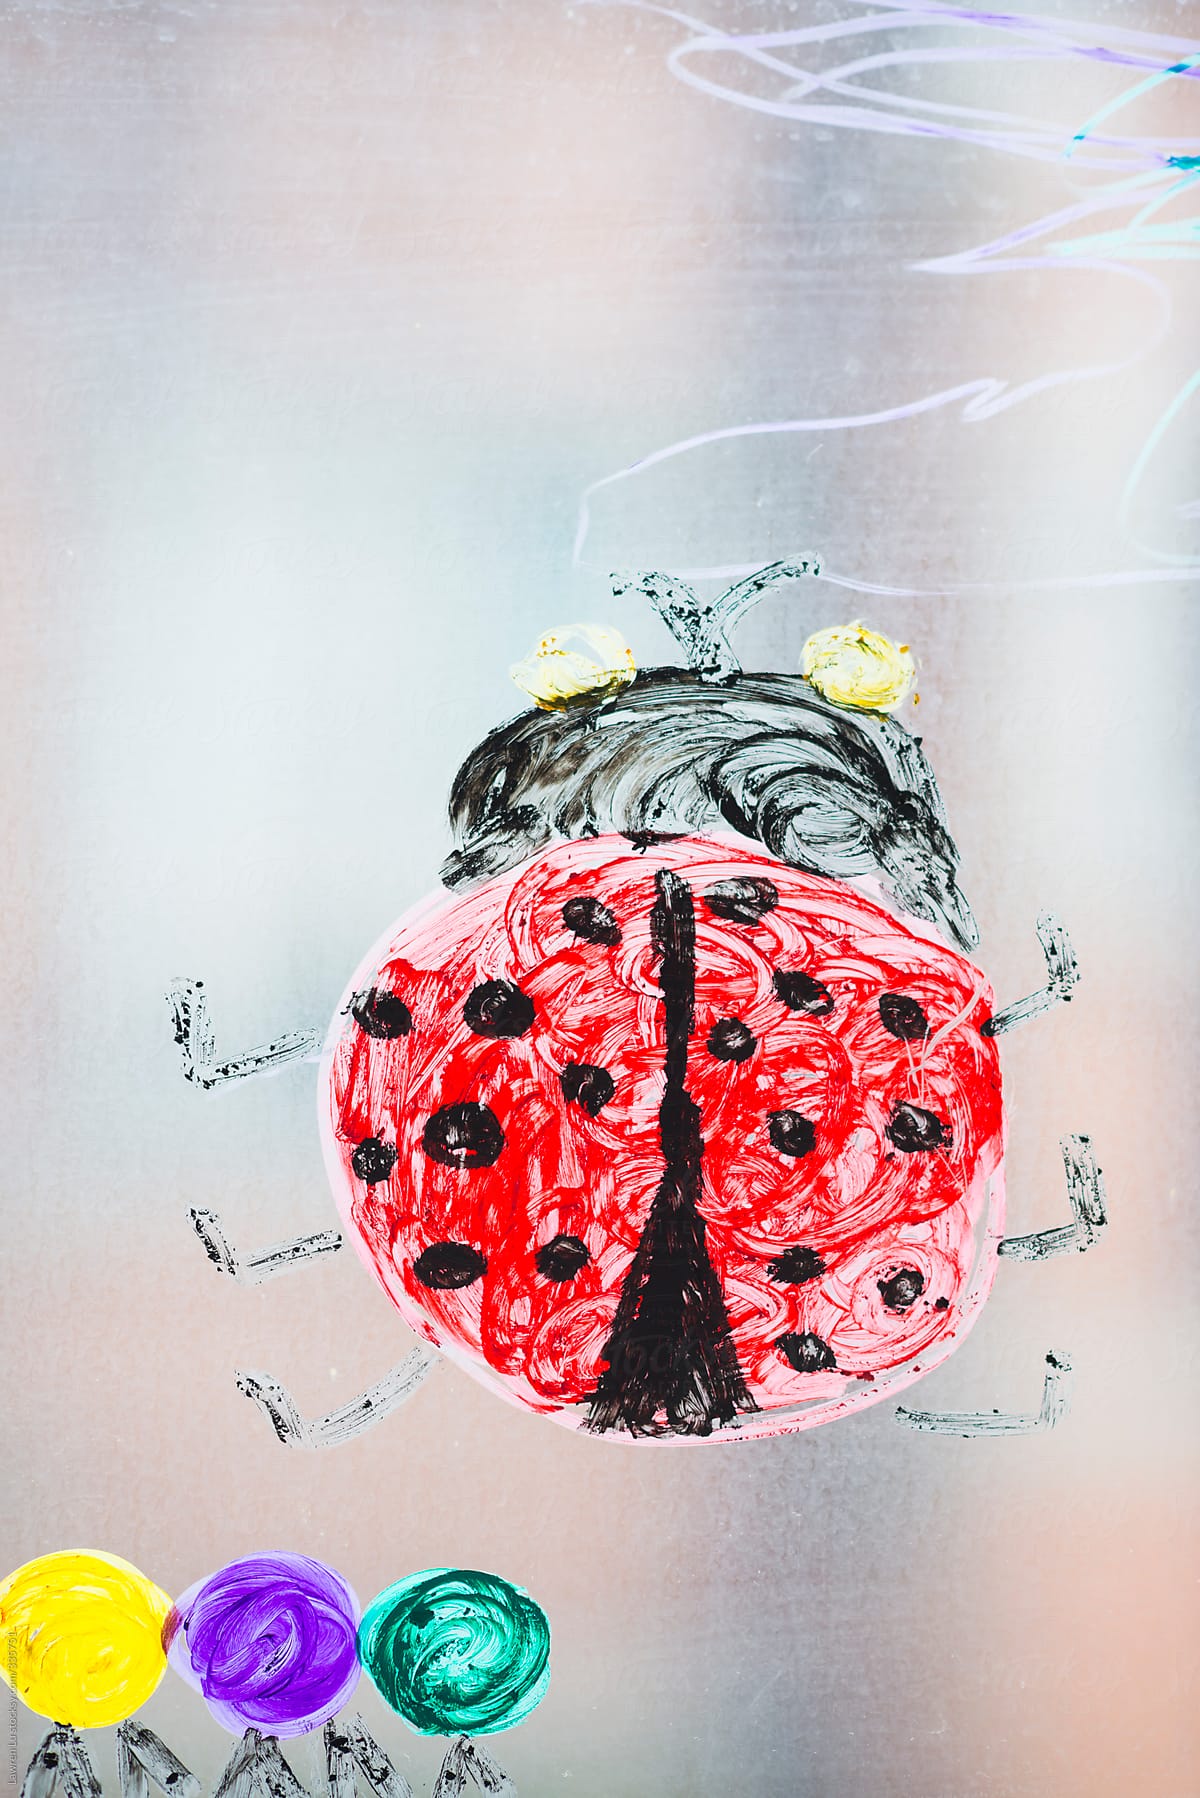 Colorful ladybug drawing on glass of window